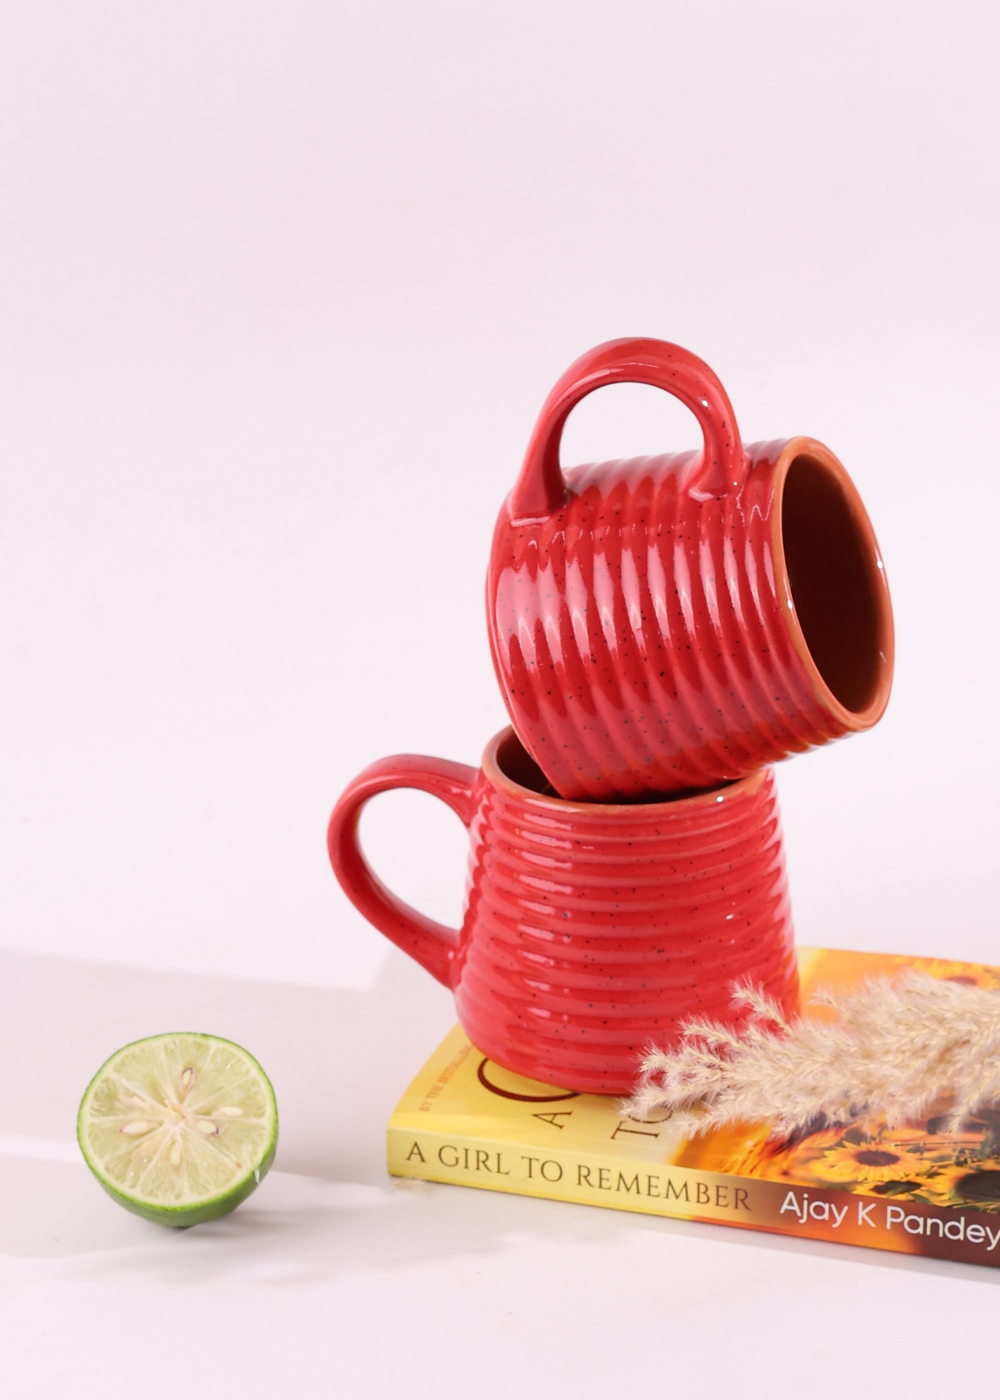 Red Ring Coffee Mug